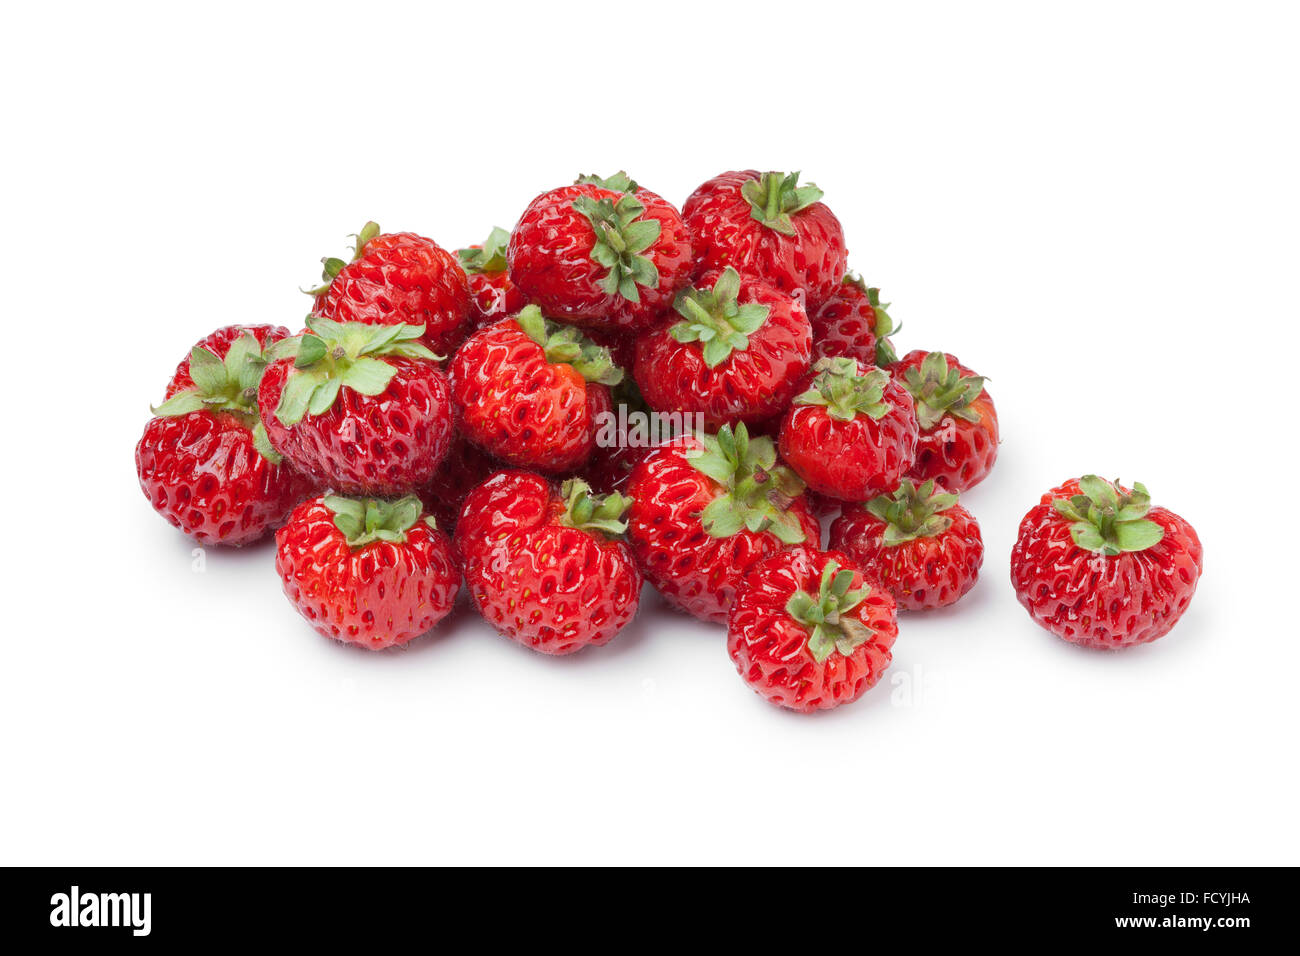 Heap of fresh ripe strasberries on white background Stock Photo